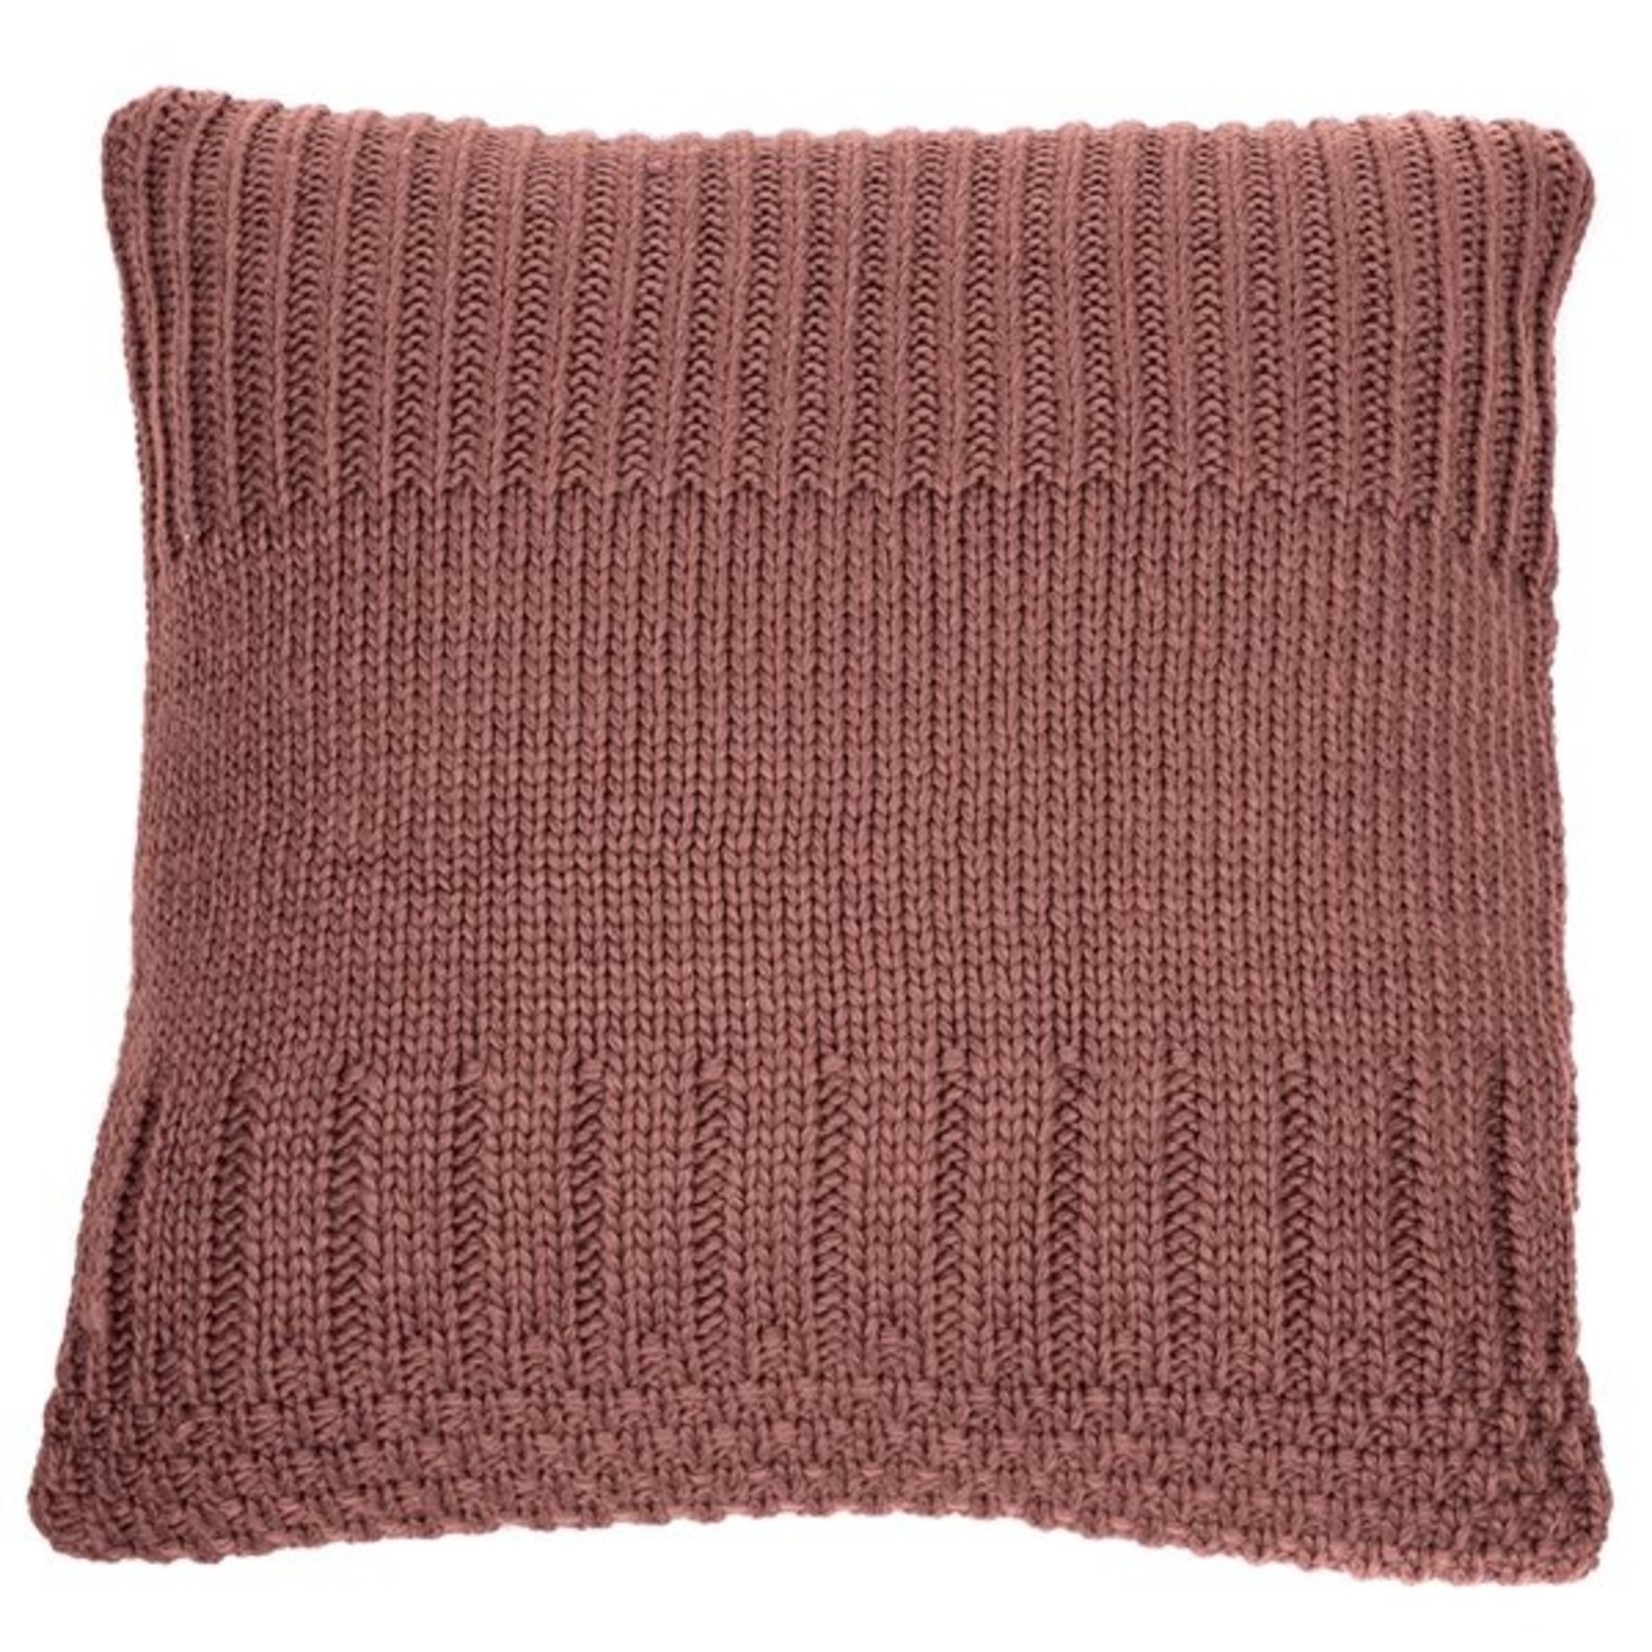 Brunelli Baba Knitted Cushion